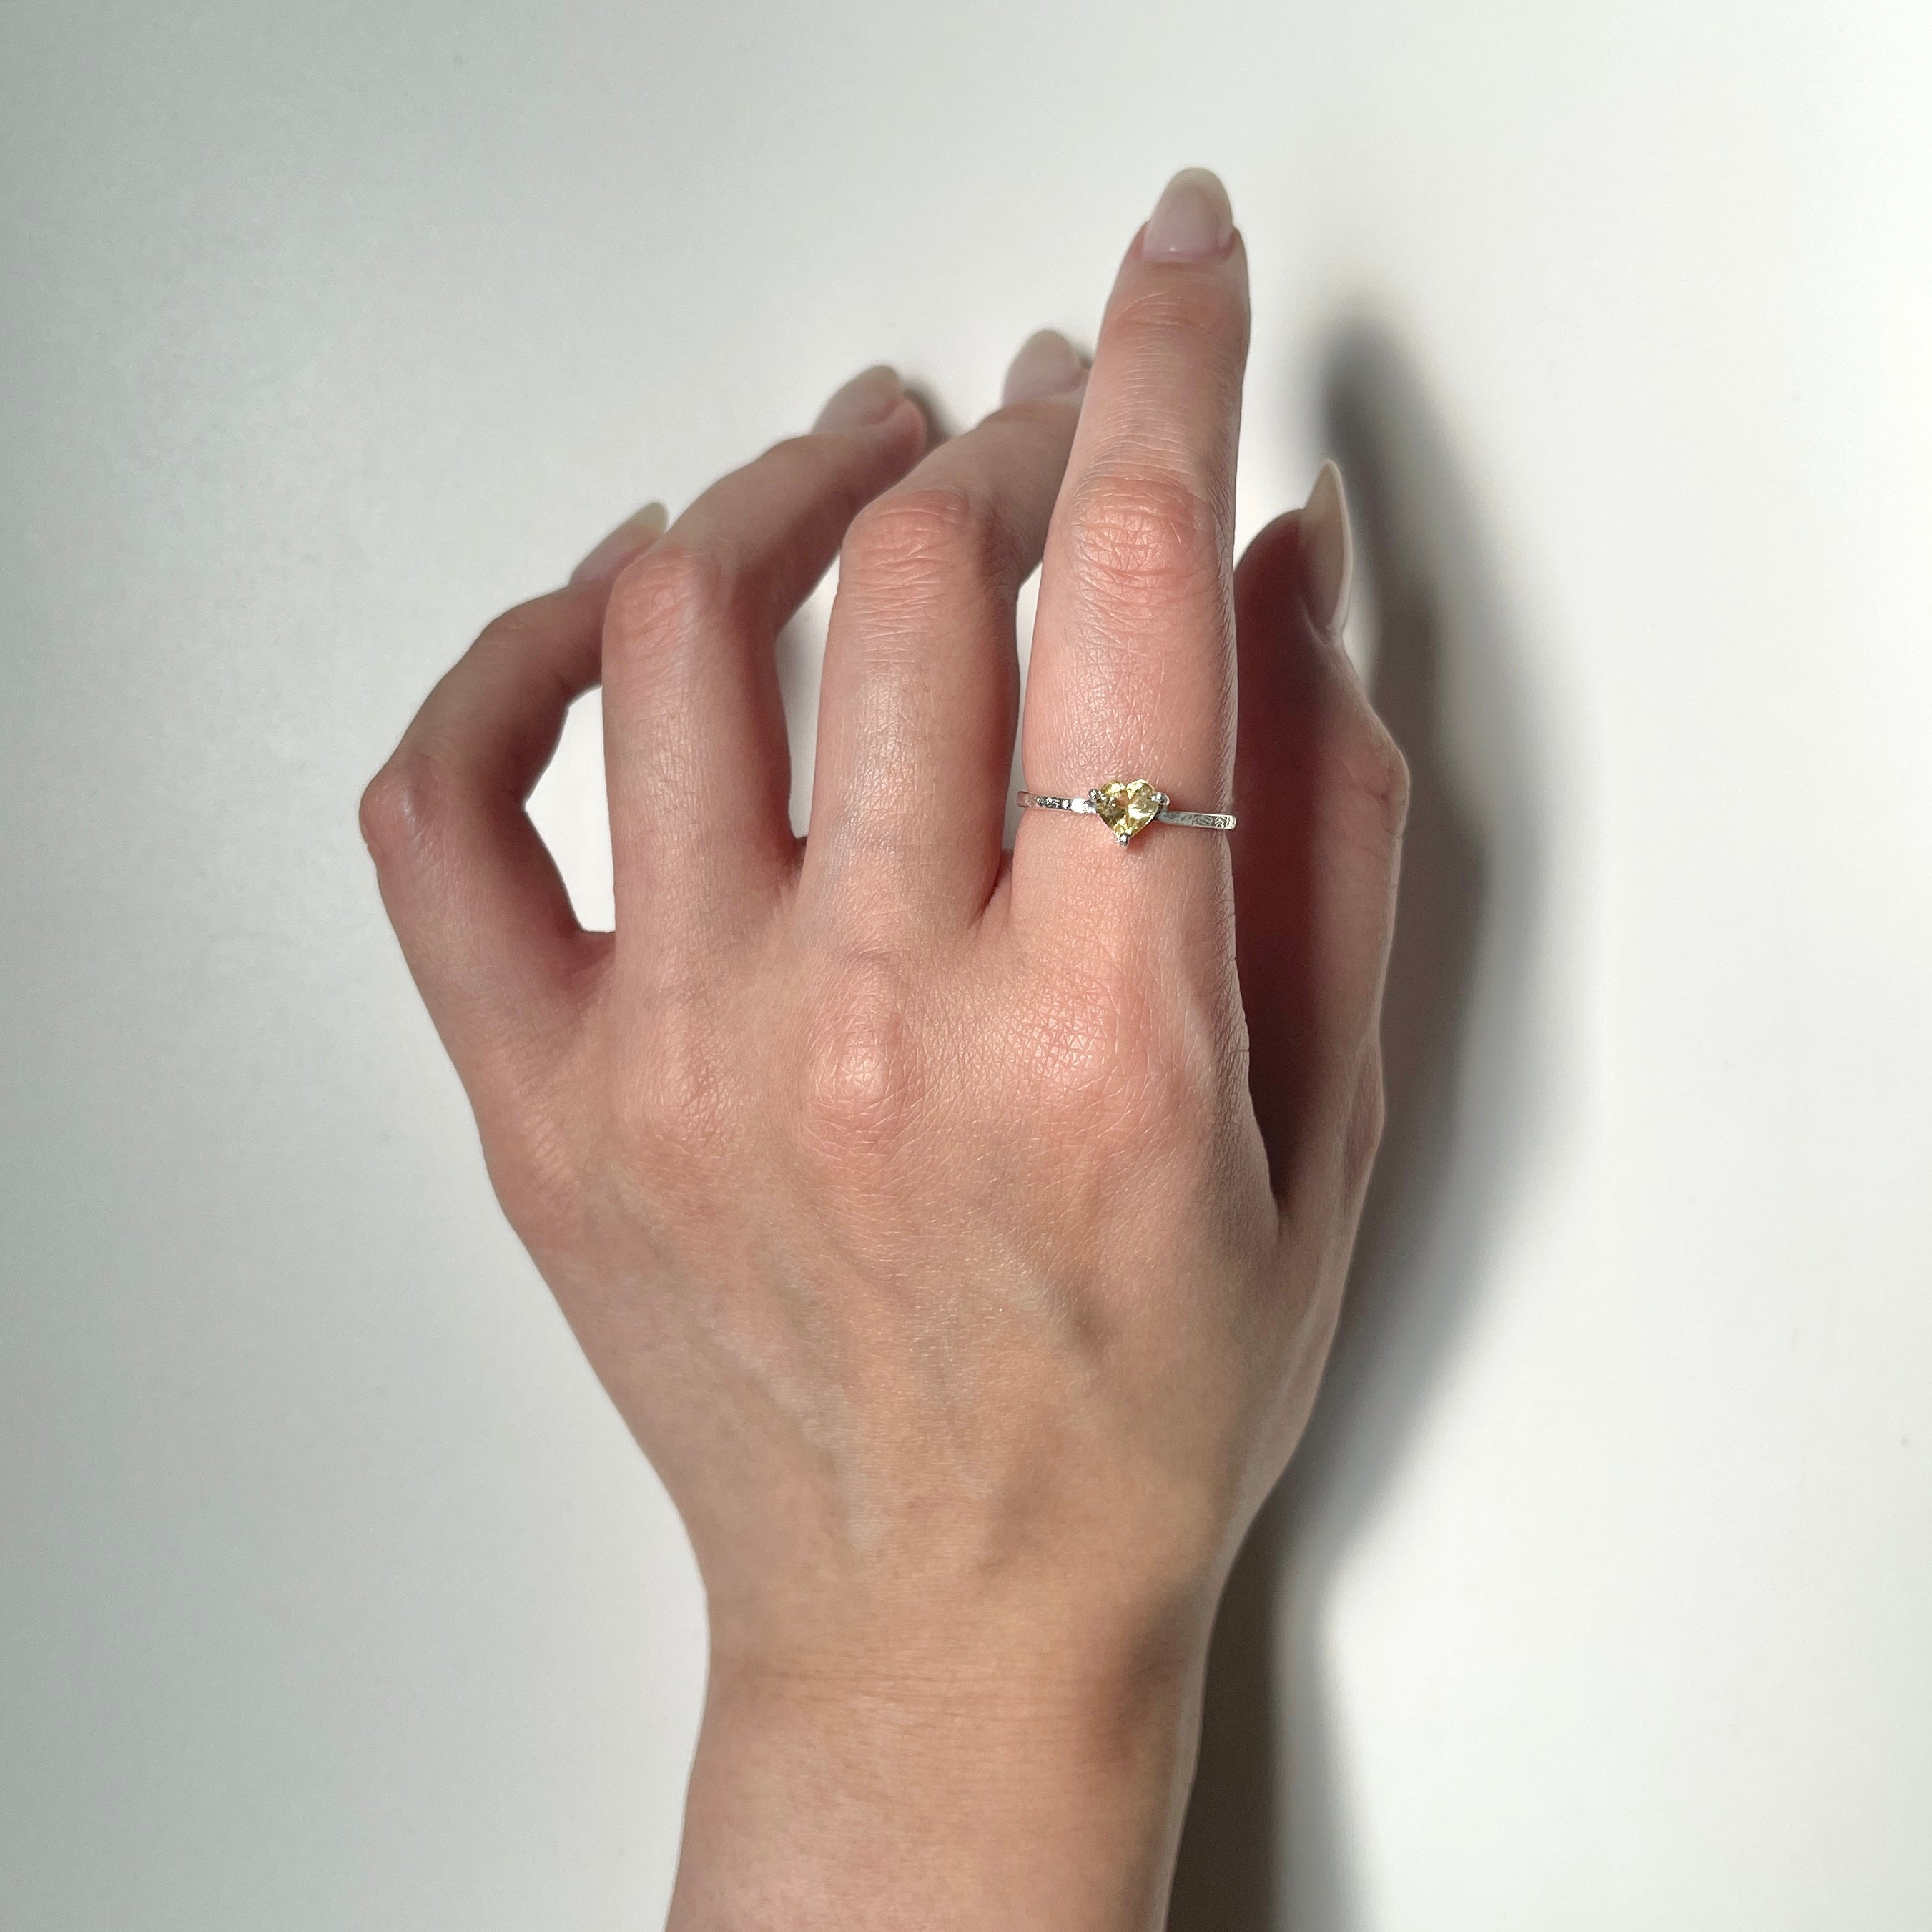 Silver925 Heart petit ring – Biju mam